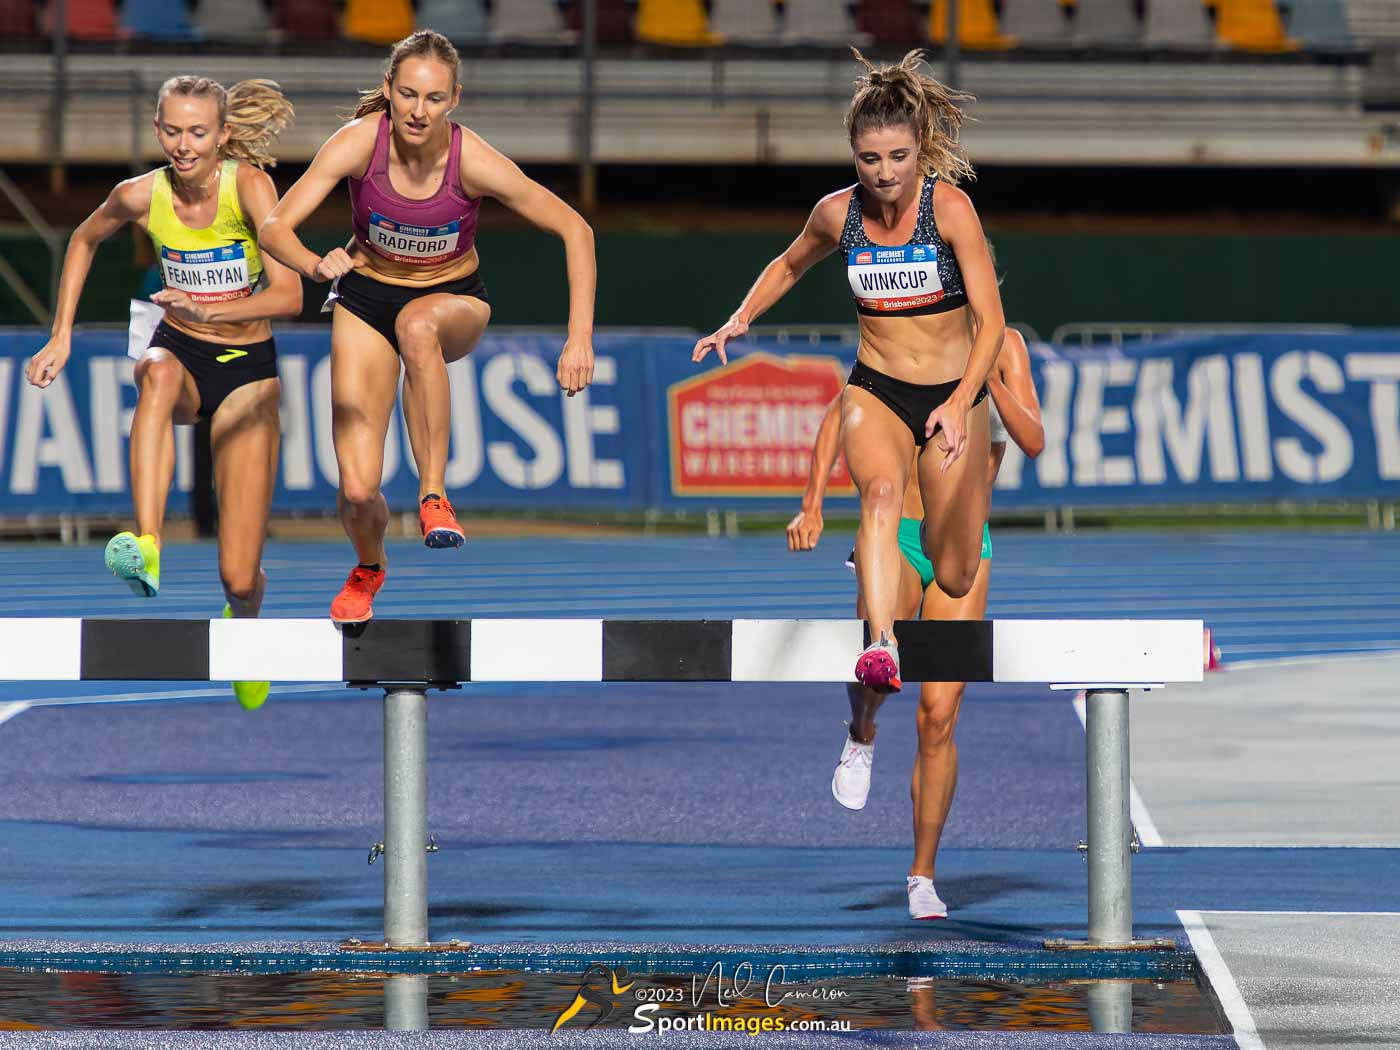 Cara Feain-Ryan, Stella Radford, Georgia Winkcup, Women's 3000m Steeplechase